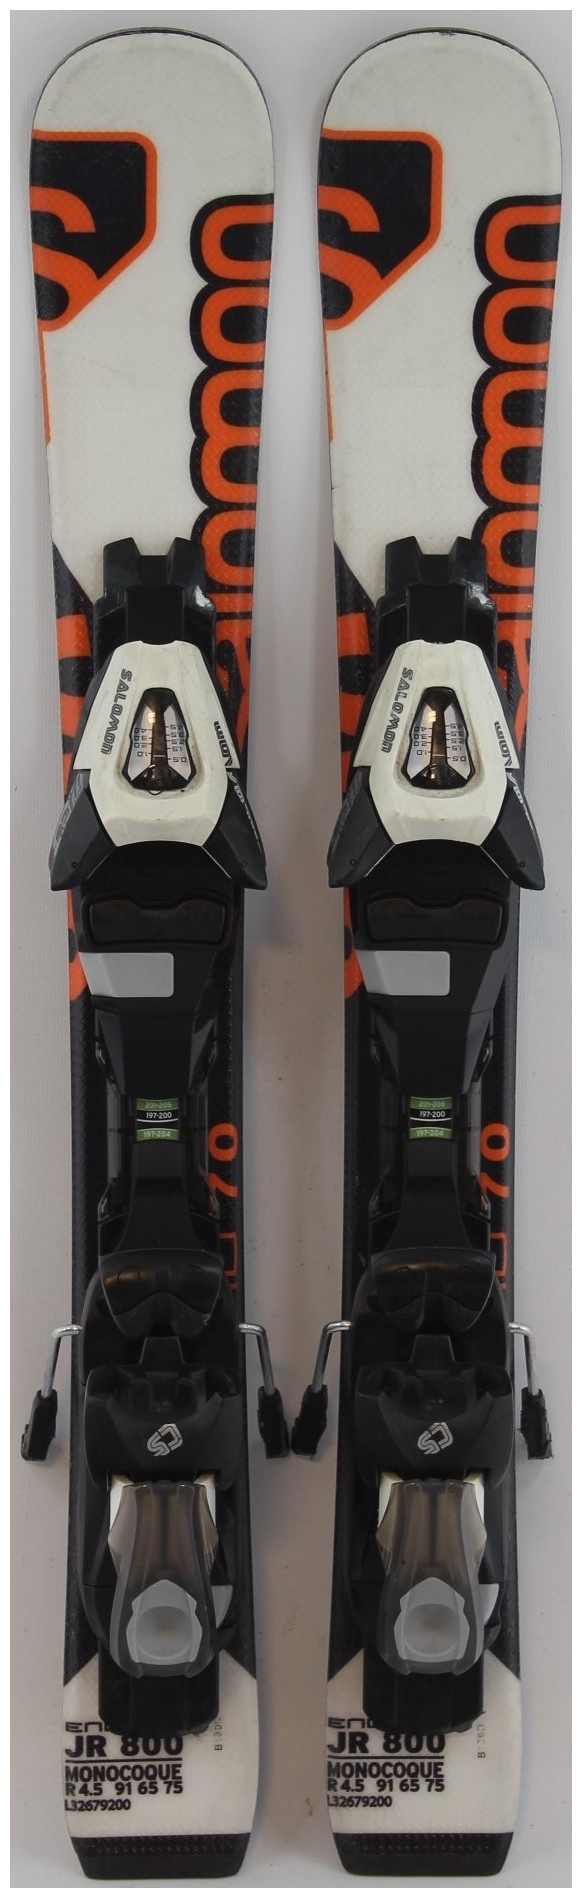 2013 Salomon Enduro JR 800 70cm Demo Skis on Sale - Powder7